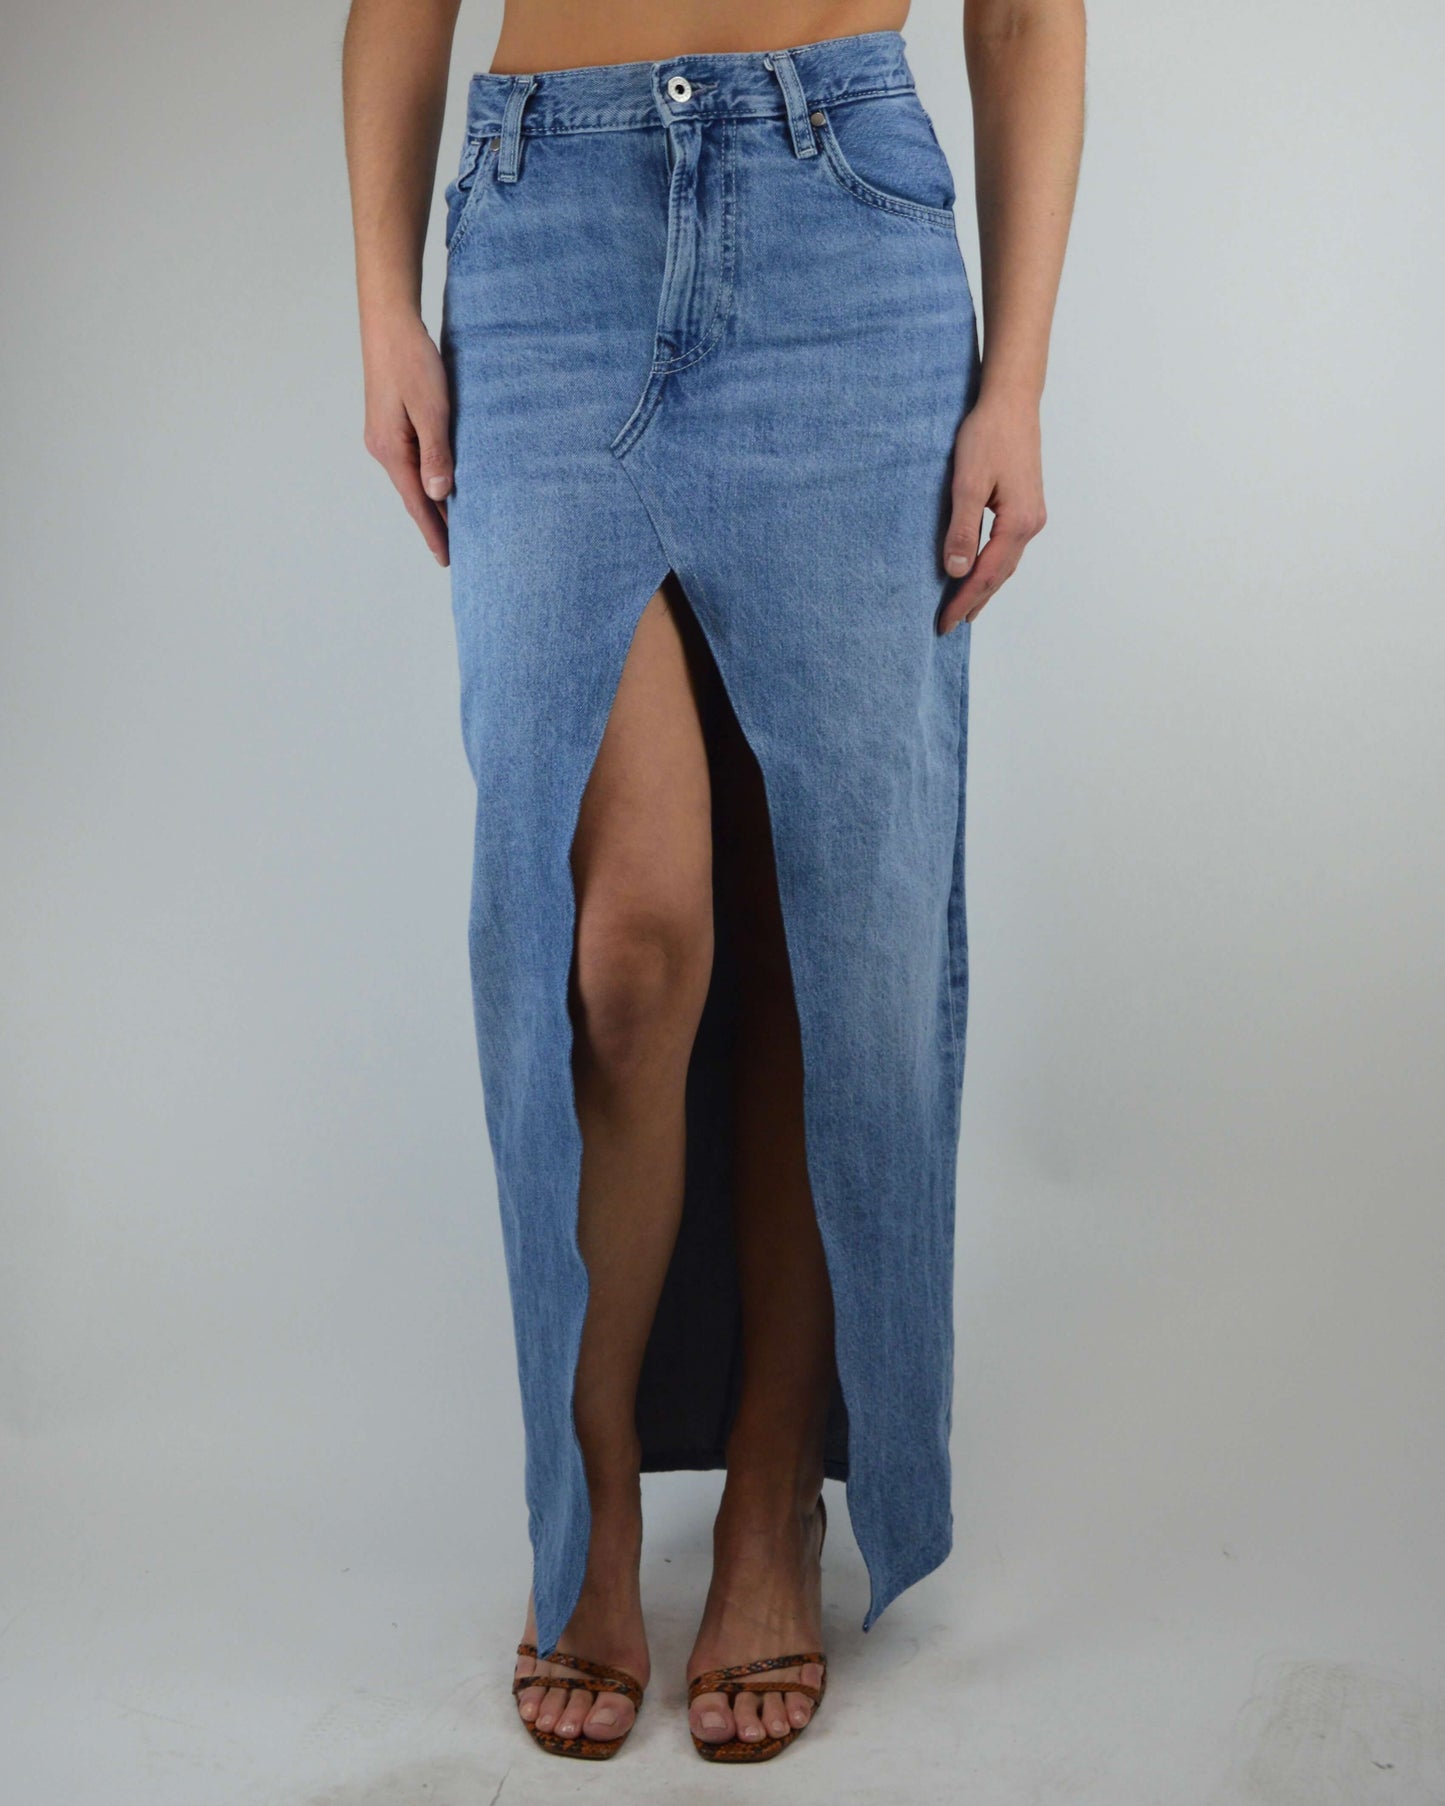 Long Skirt - Vintage Pepe Jeans Light Wash Denim (S/M)